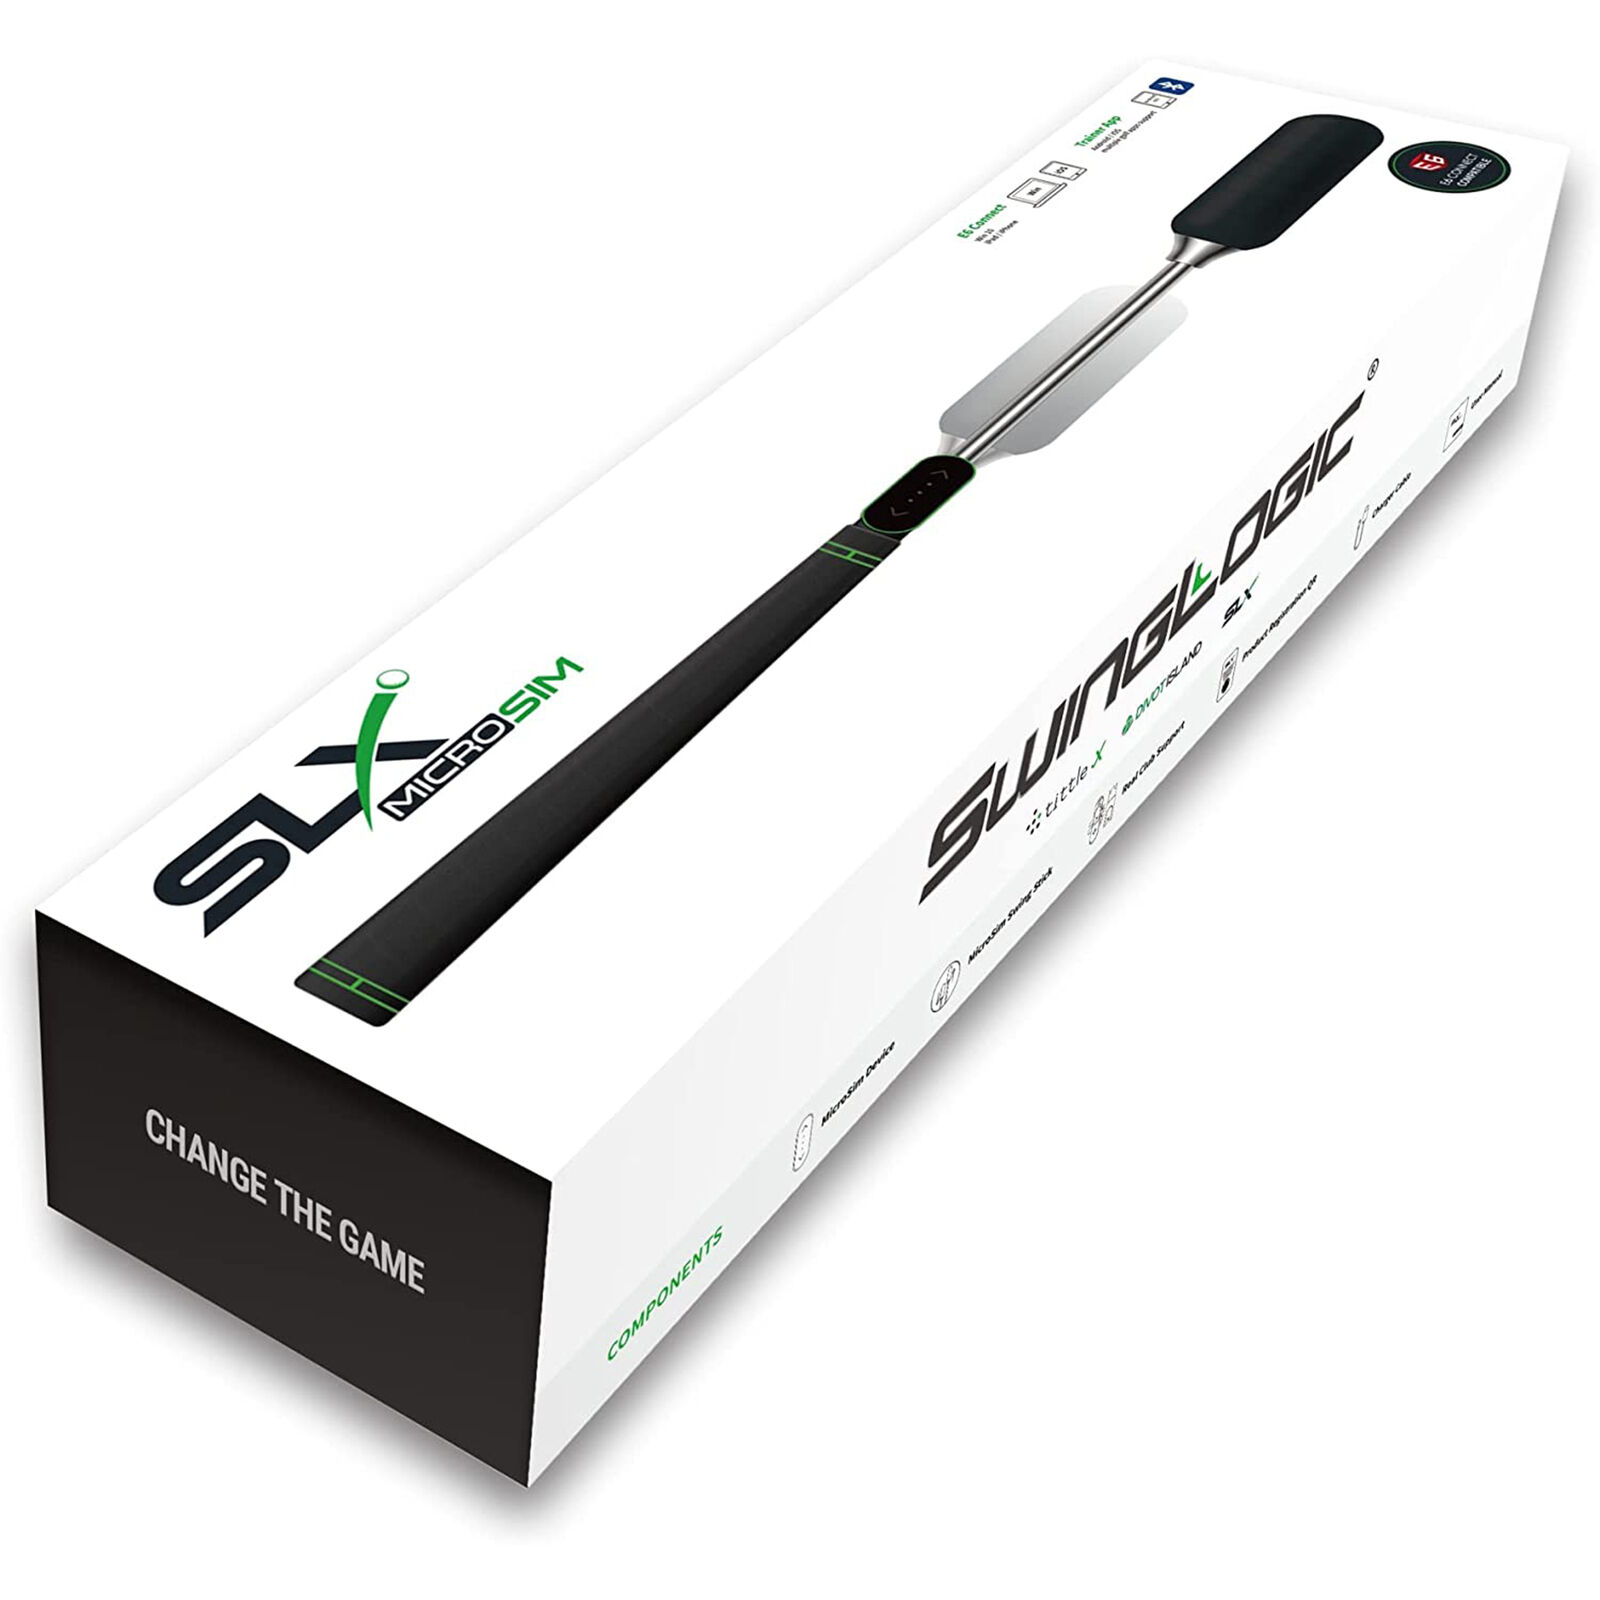 Swinglogic Slx Microsim Indoor Golf Simulator Game With E6 Connect Compatibility